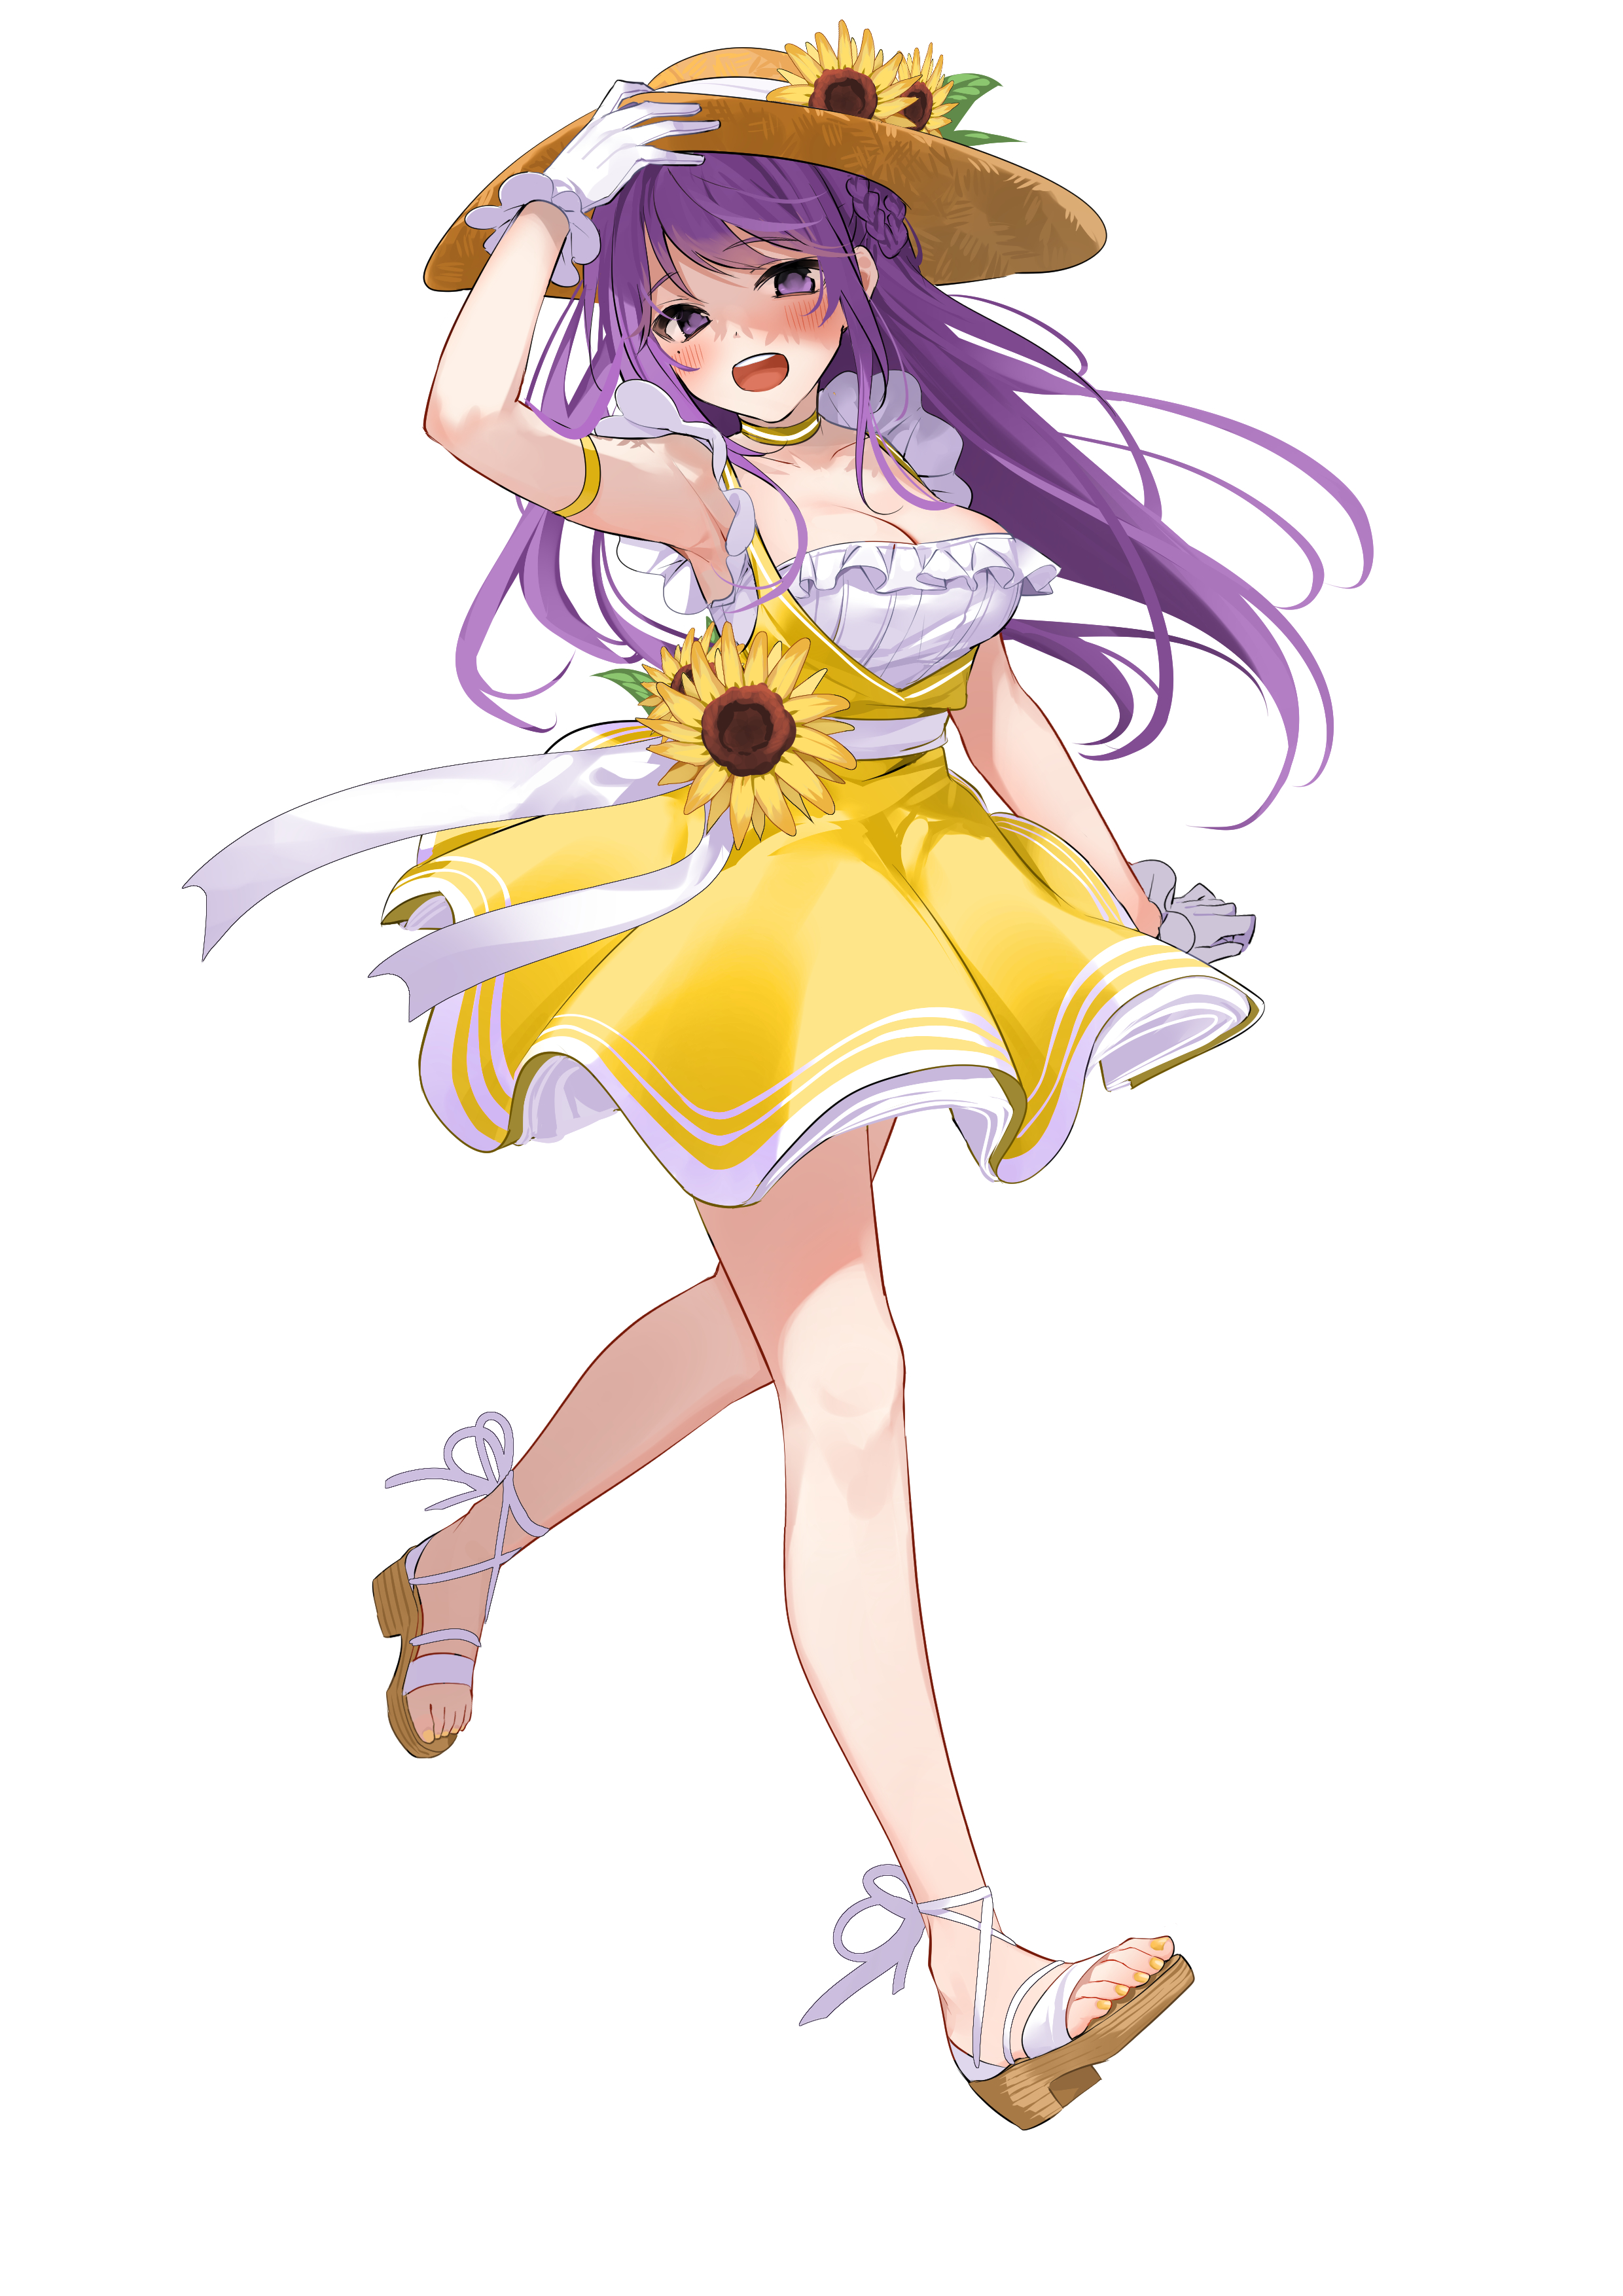 Anime 2480x3508 anime girls anime digital art artwork 2D portrait display vertical Xretakex purple hair purple eyes blush hat dress summer dress sunflowers cleavage